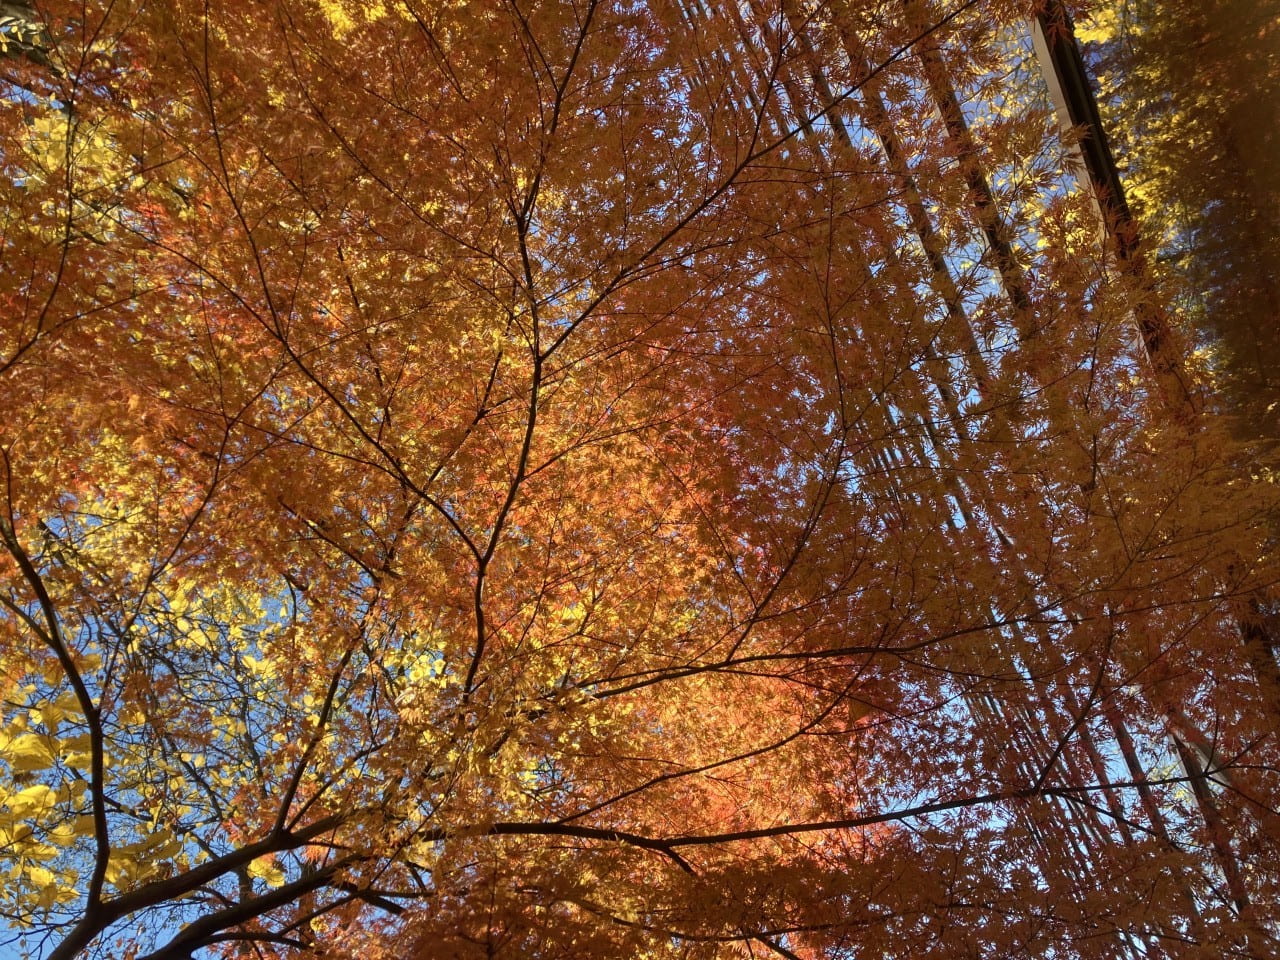 Light filters through the vibrant fall foliage of Acer palmatum var. dissectum.